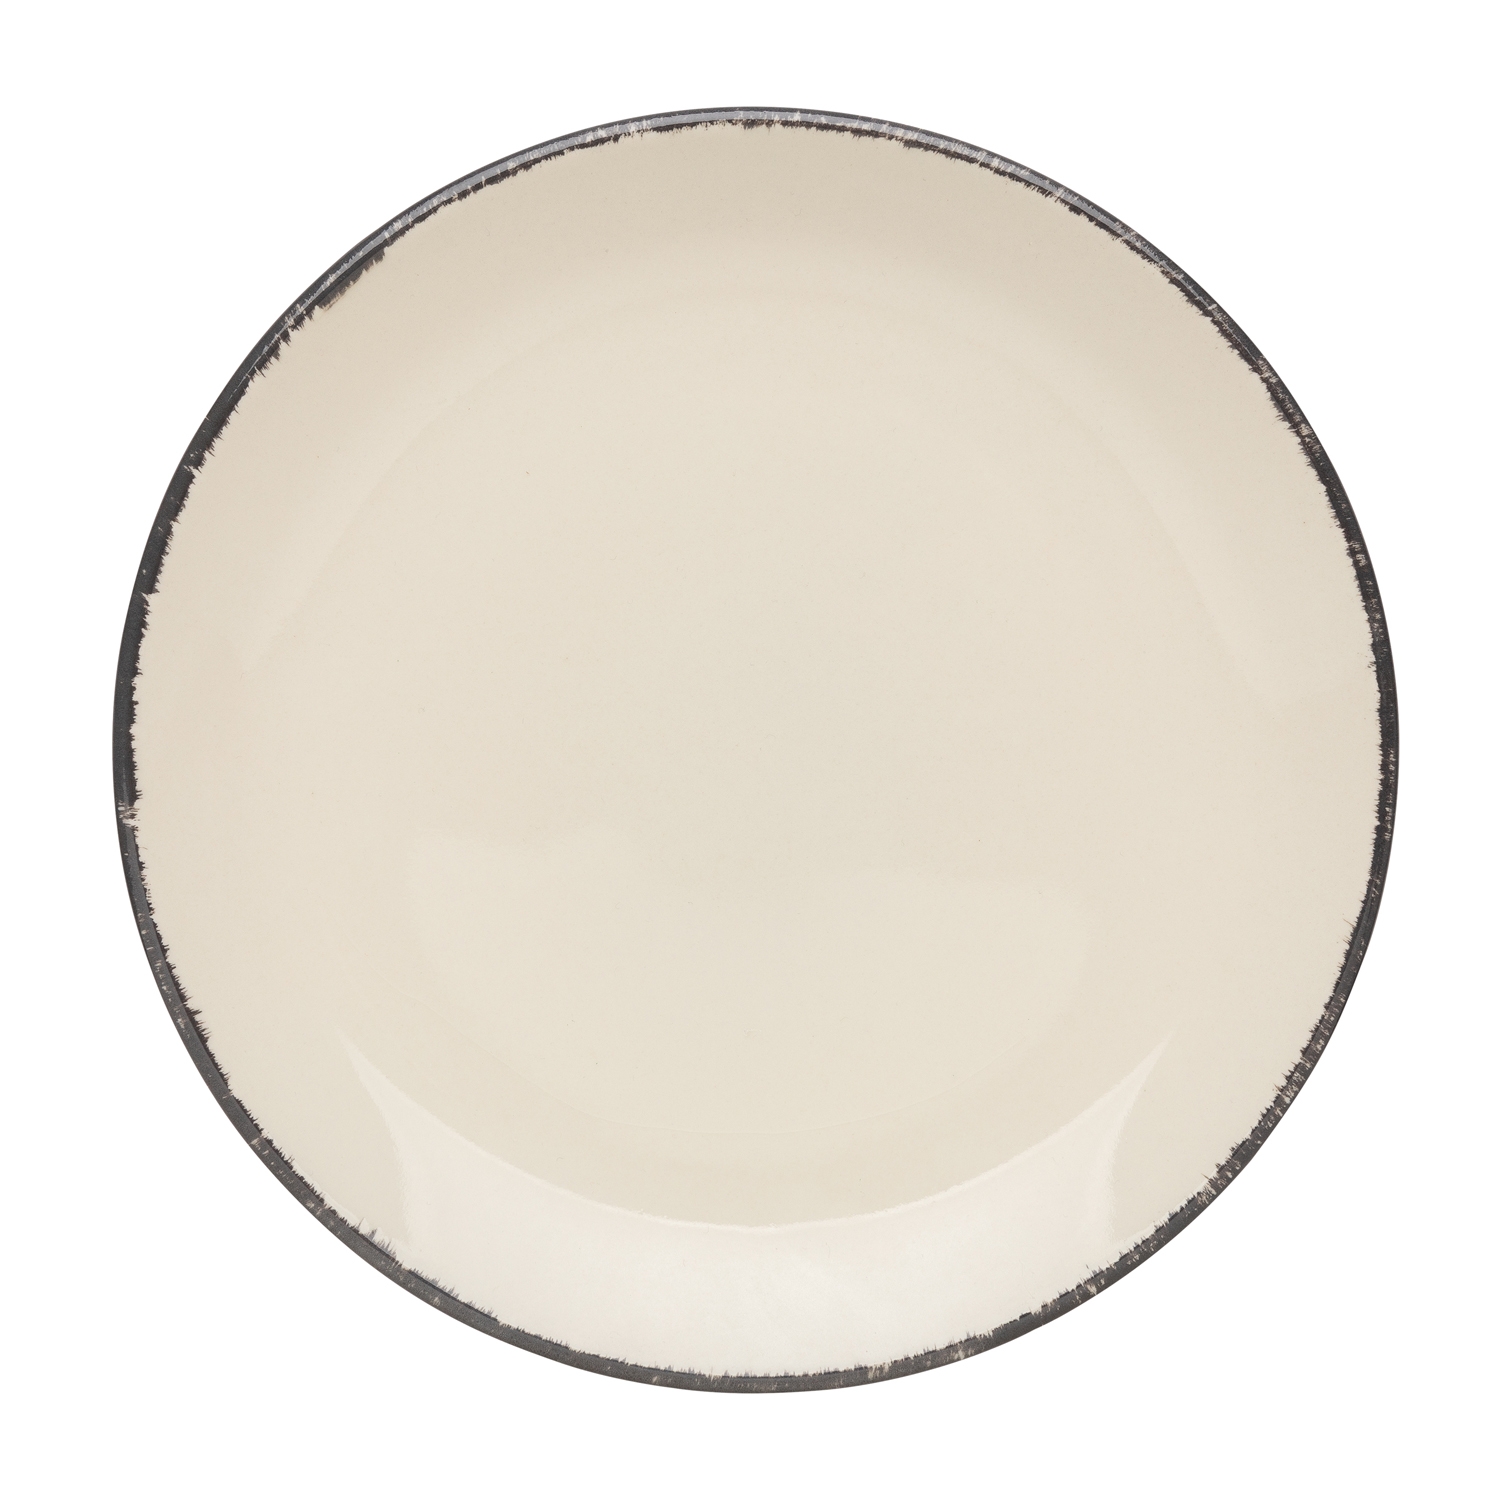 Набор керамических тарелок Ukiyo, 2 предмета, керамика